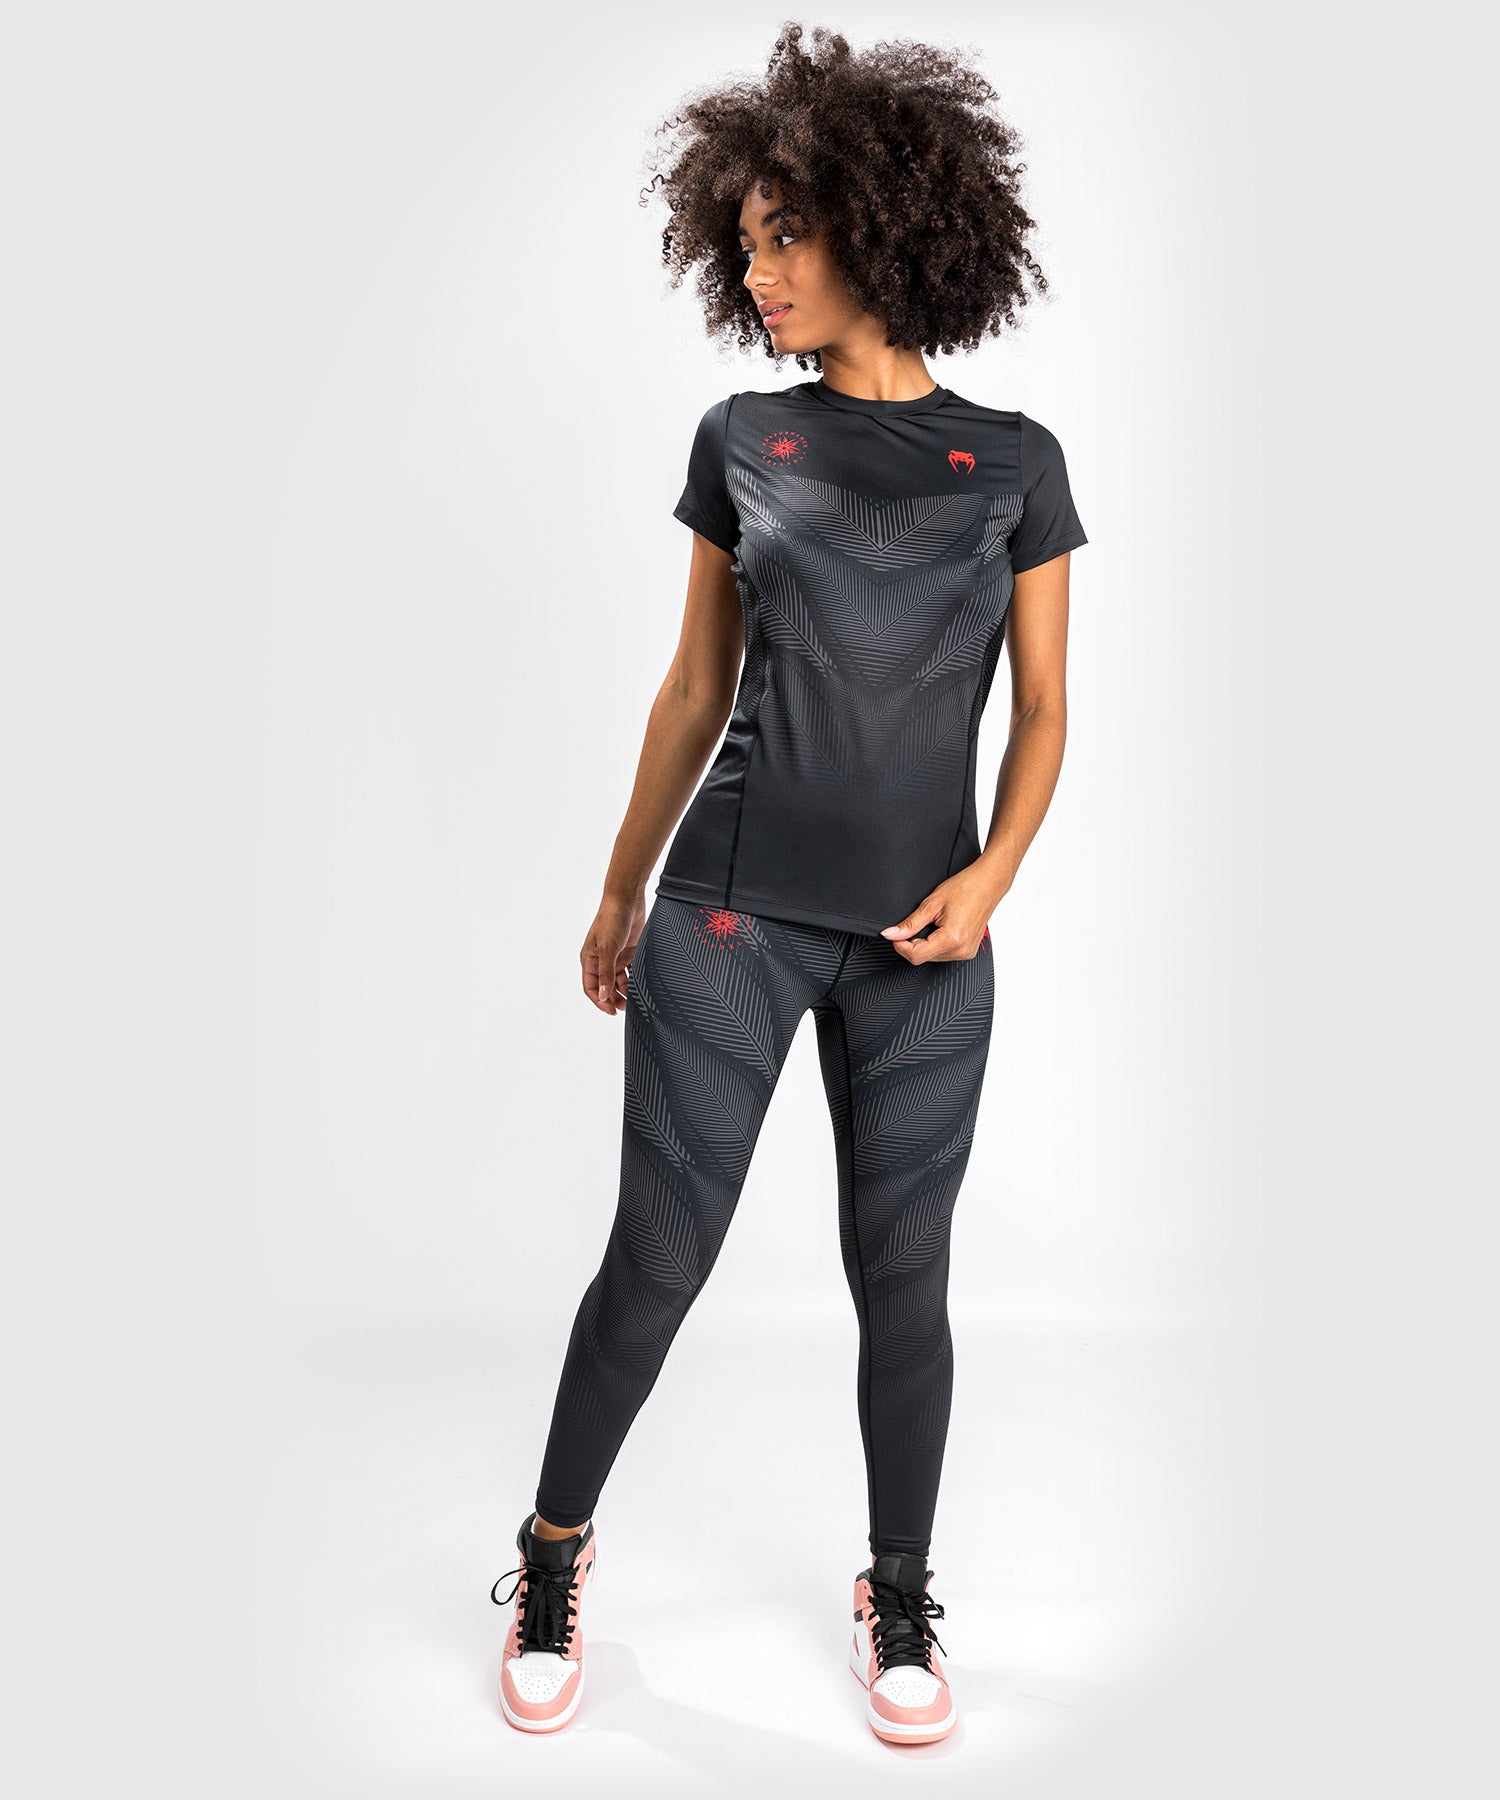 Venum Phantom Compression T-Shirt - Long Sleeve - For Women - Black/Red 